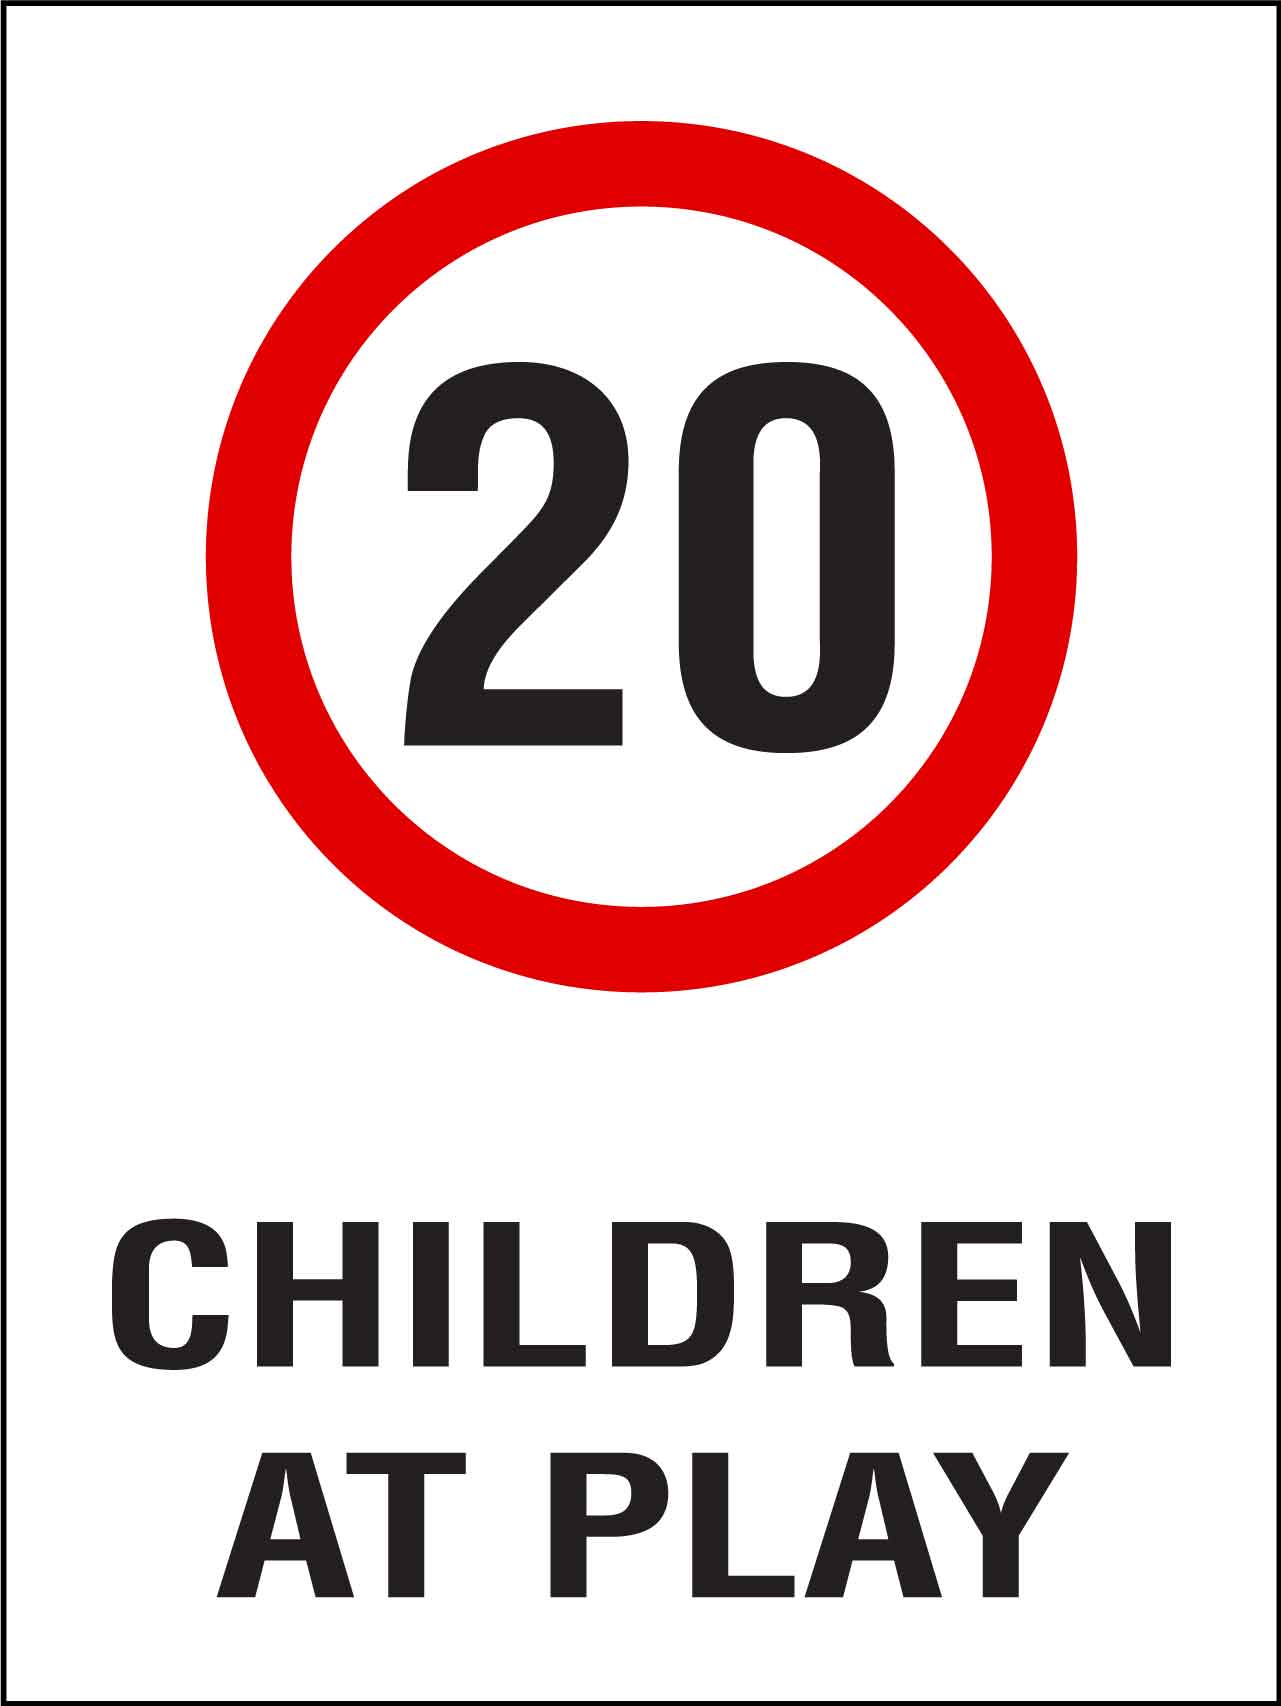 Children At Play 20km Speed Limit Sign